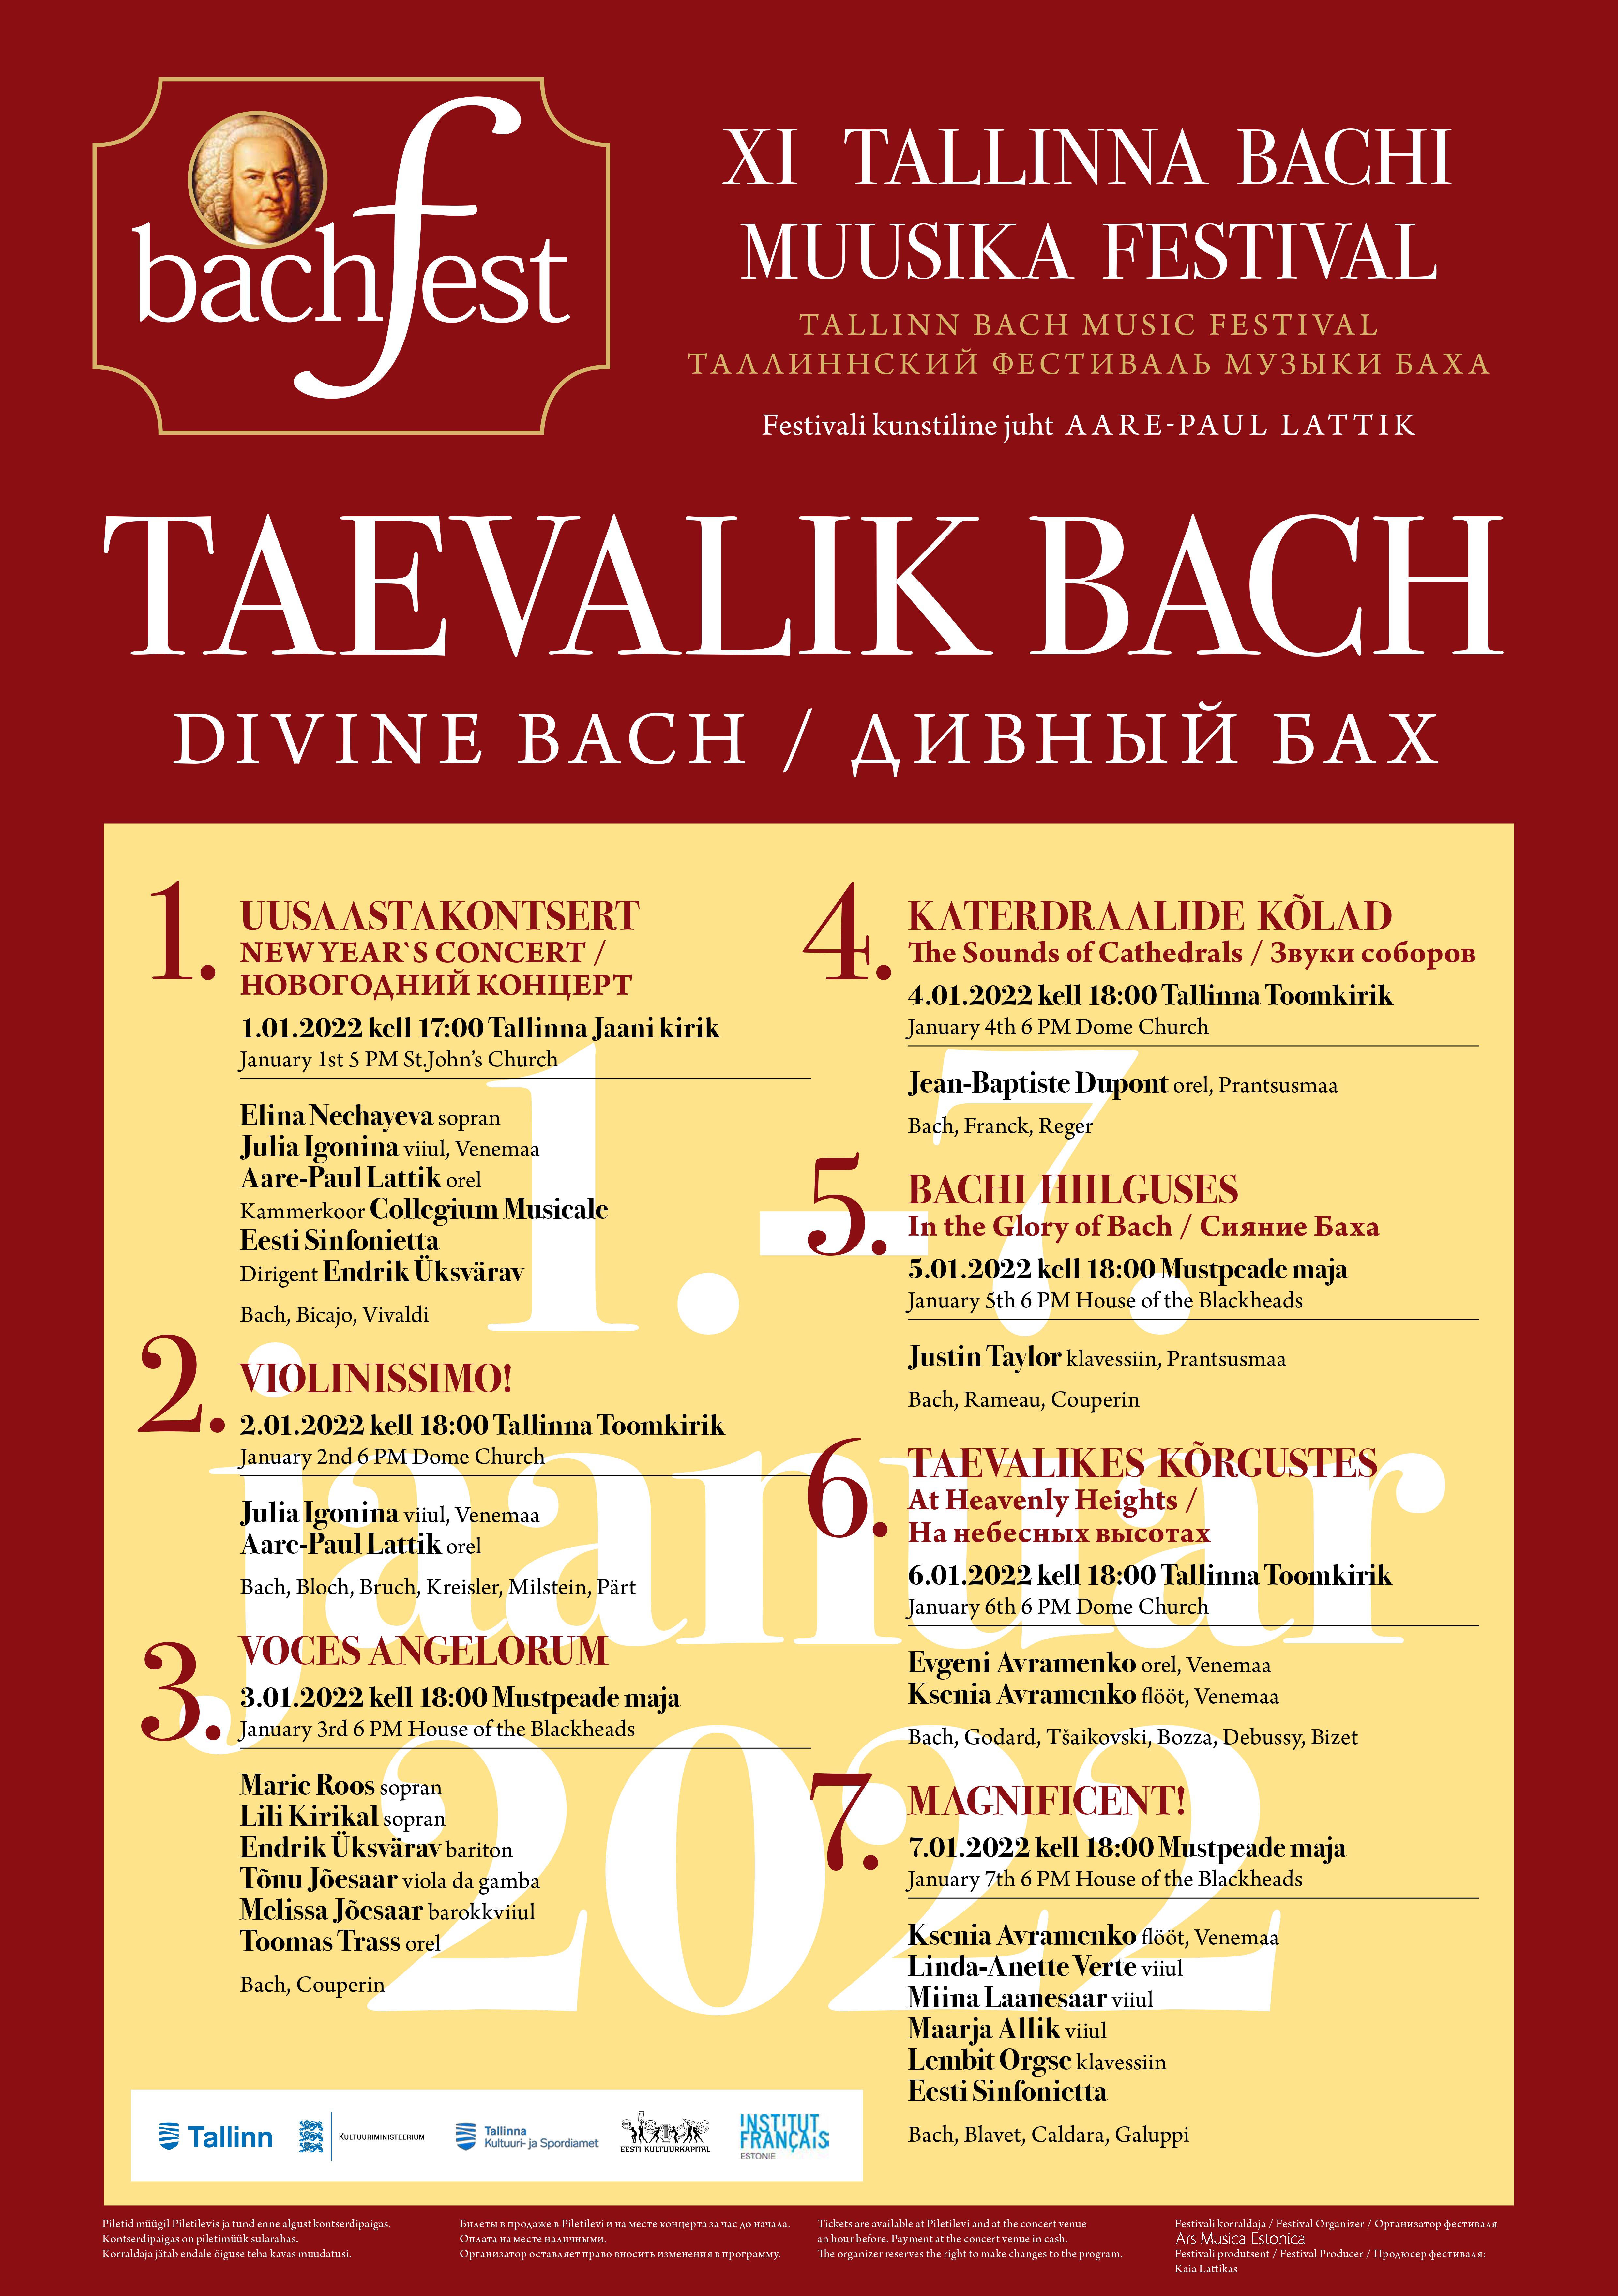 MAGNIFICENT / XI Tallinna Bachi muusika festival BACHFEST 2022